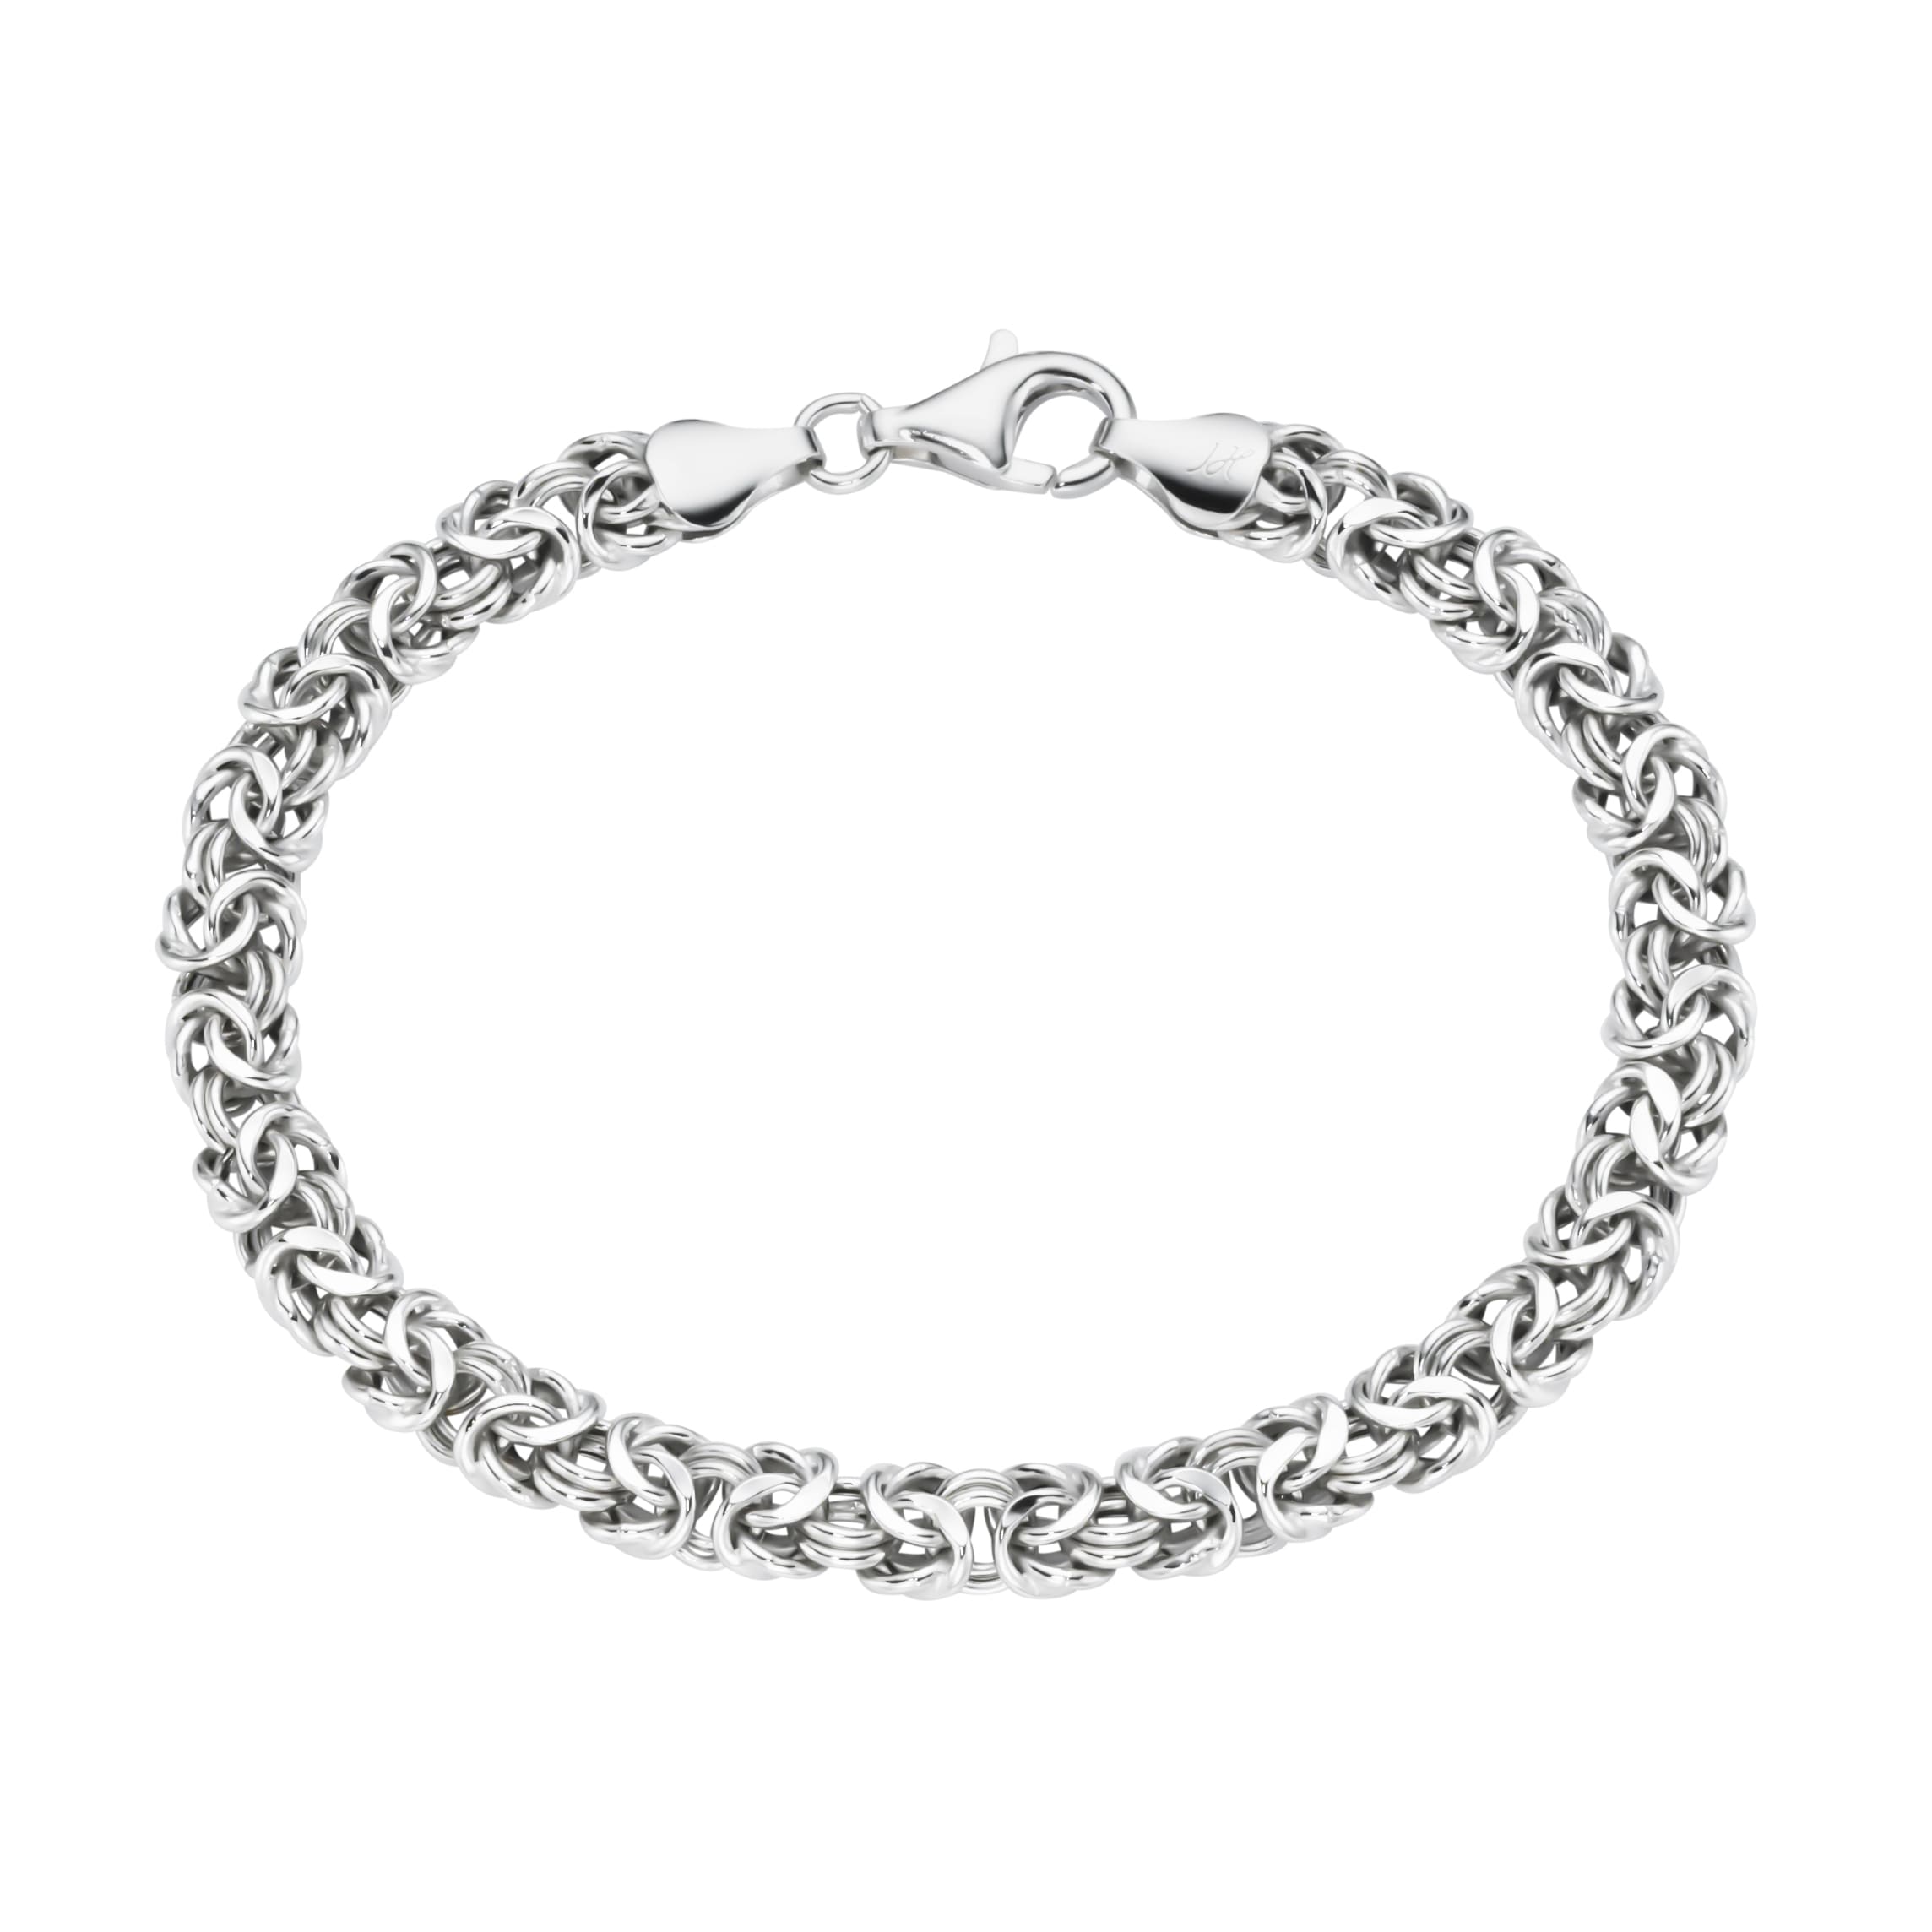 Shop oval, OTTO Smart Silber 925« Jewel Online im »Armband Armband Königskette,